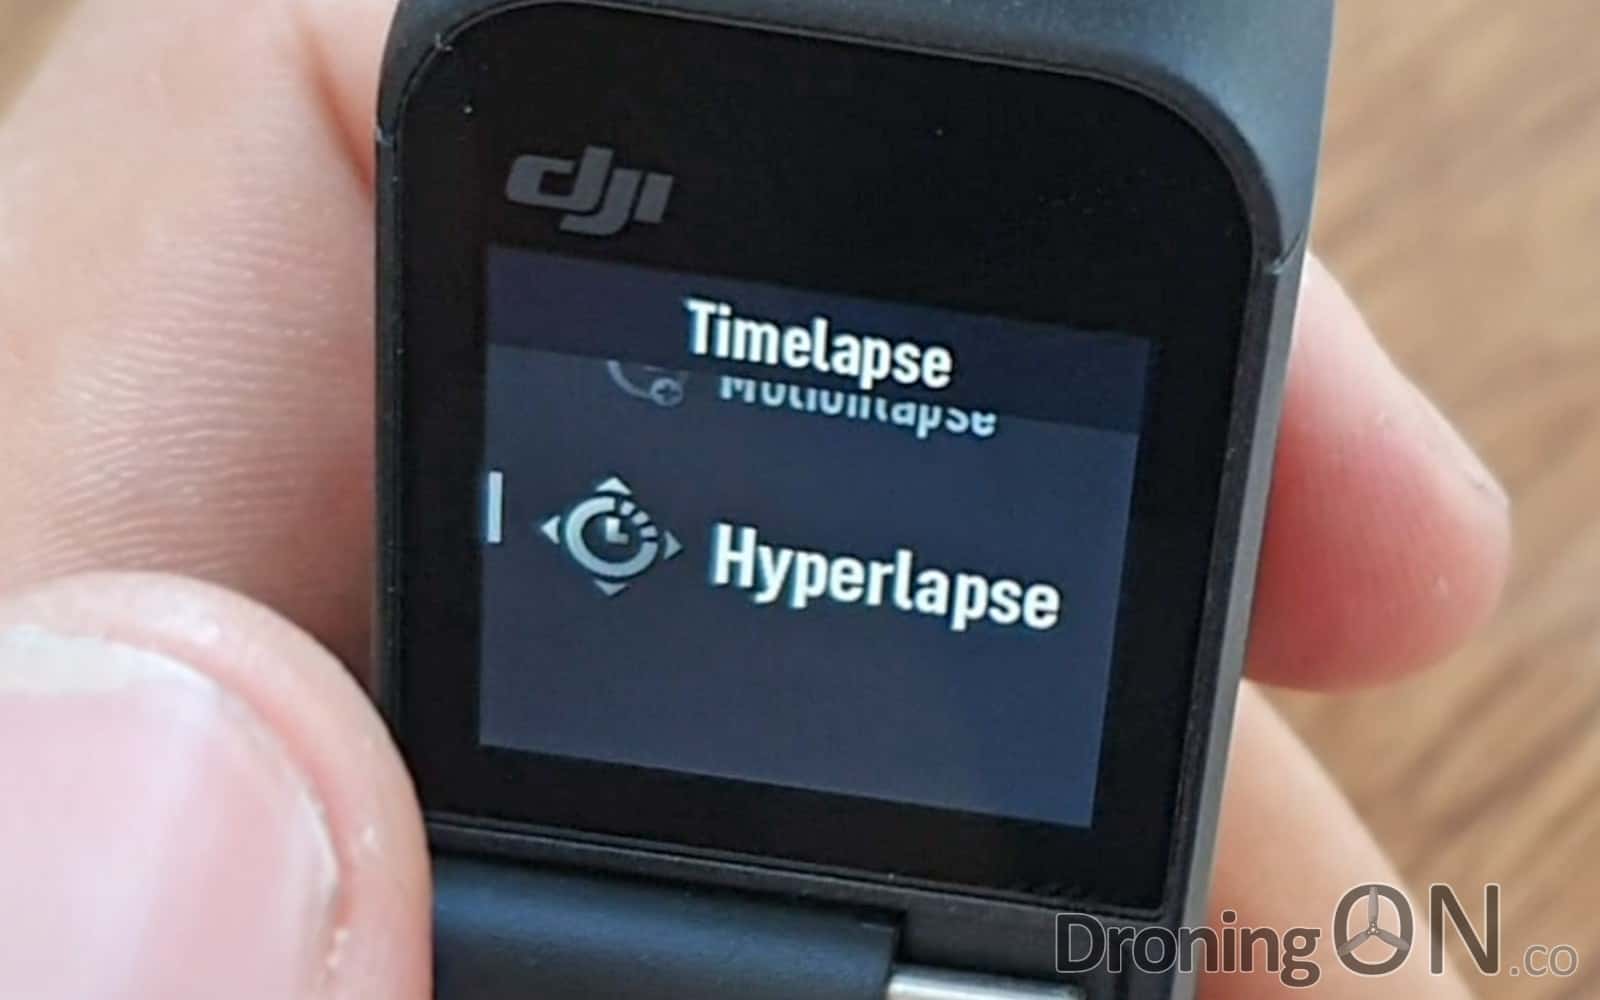 DJI Osmo Pocket finally gets Hyperlapse mode